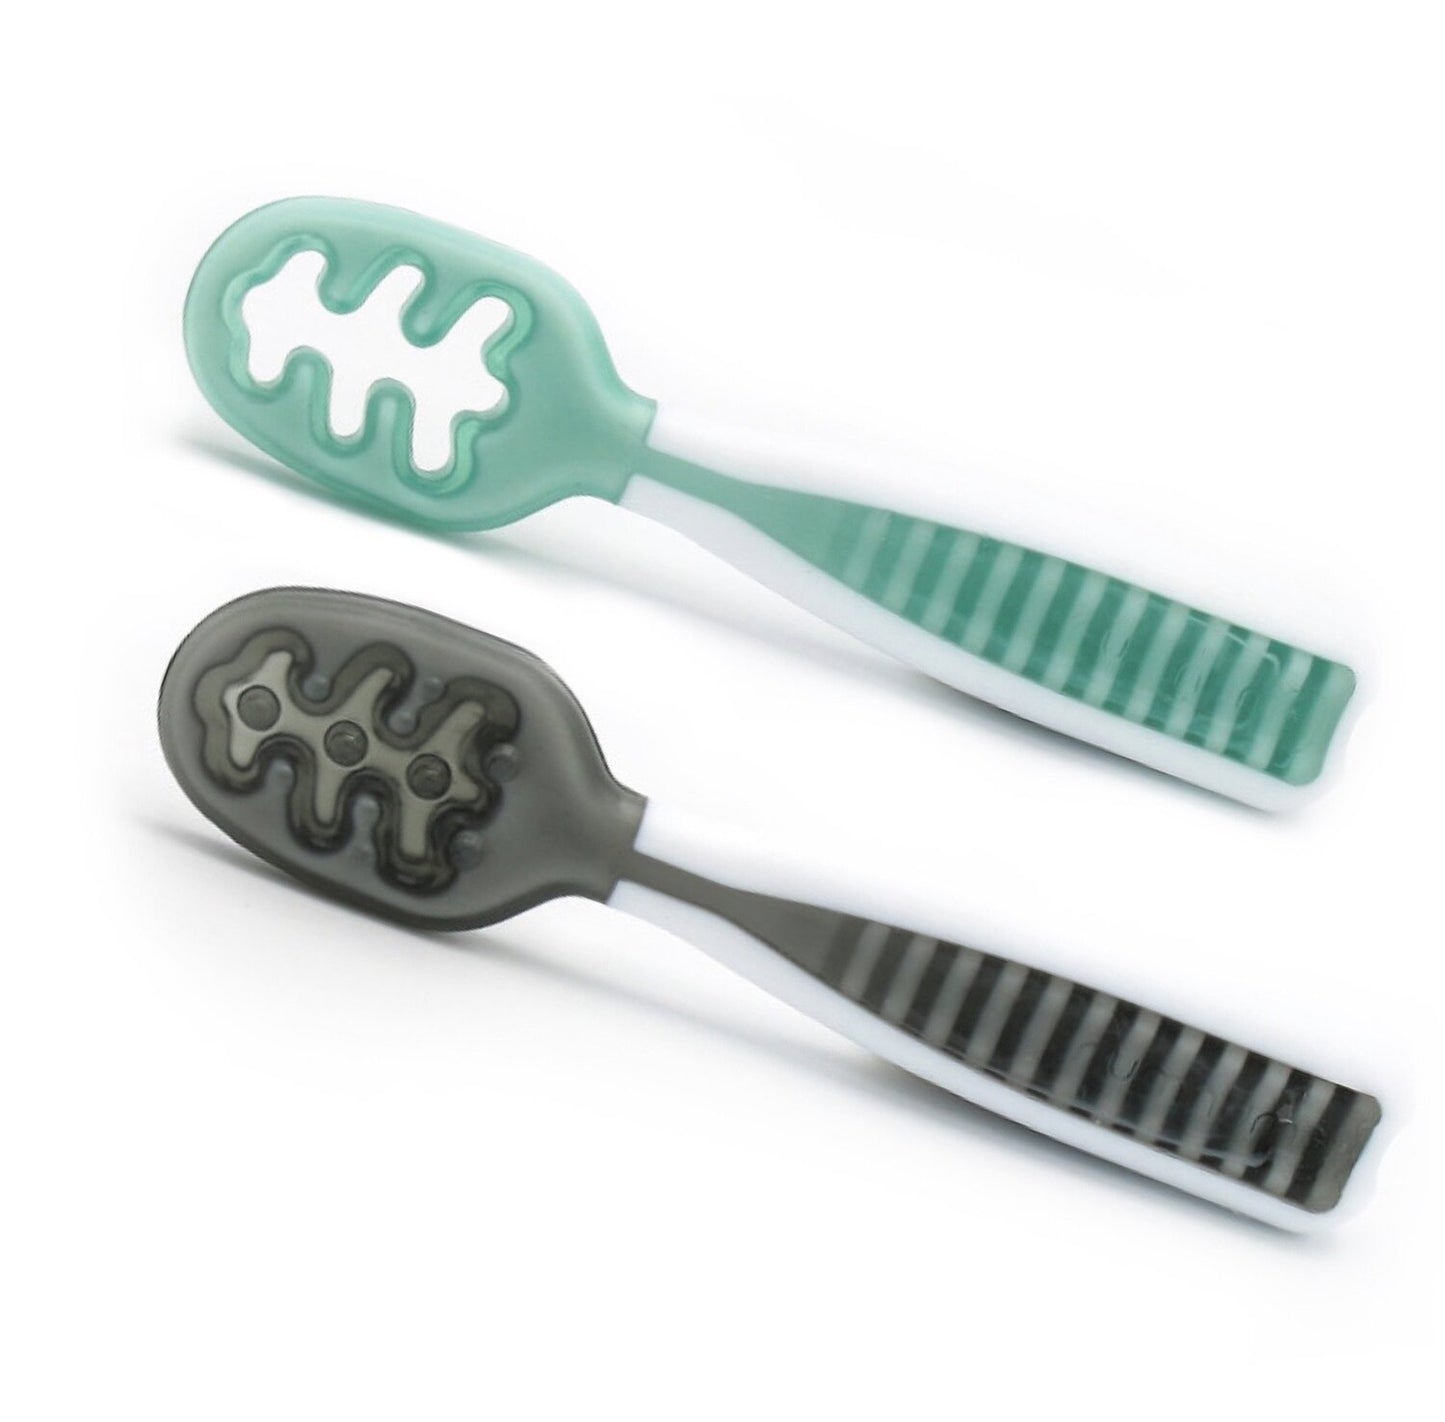 Numnum GOOtensil Self-feeding Pre-spoons (Set of 2) - Grey & Green